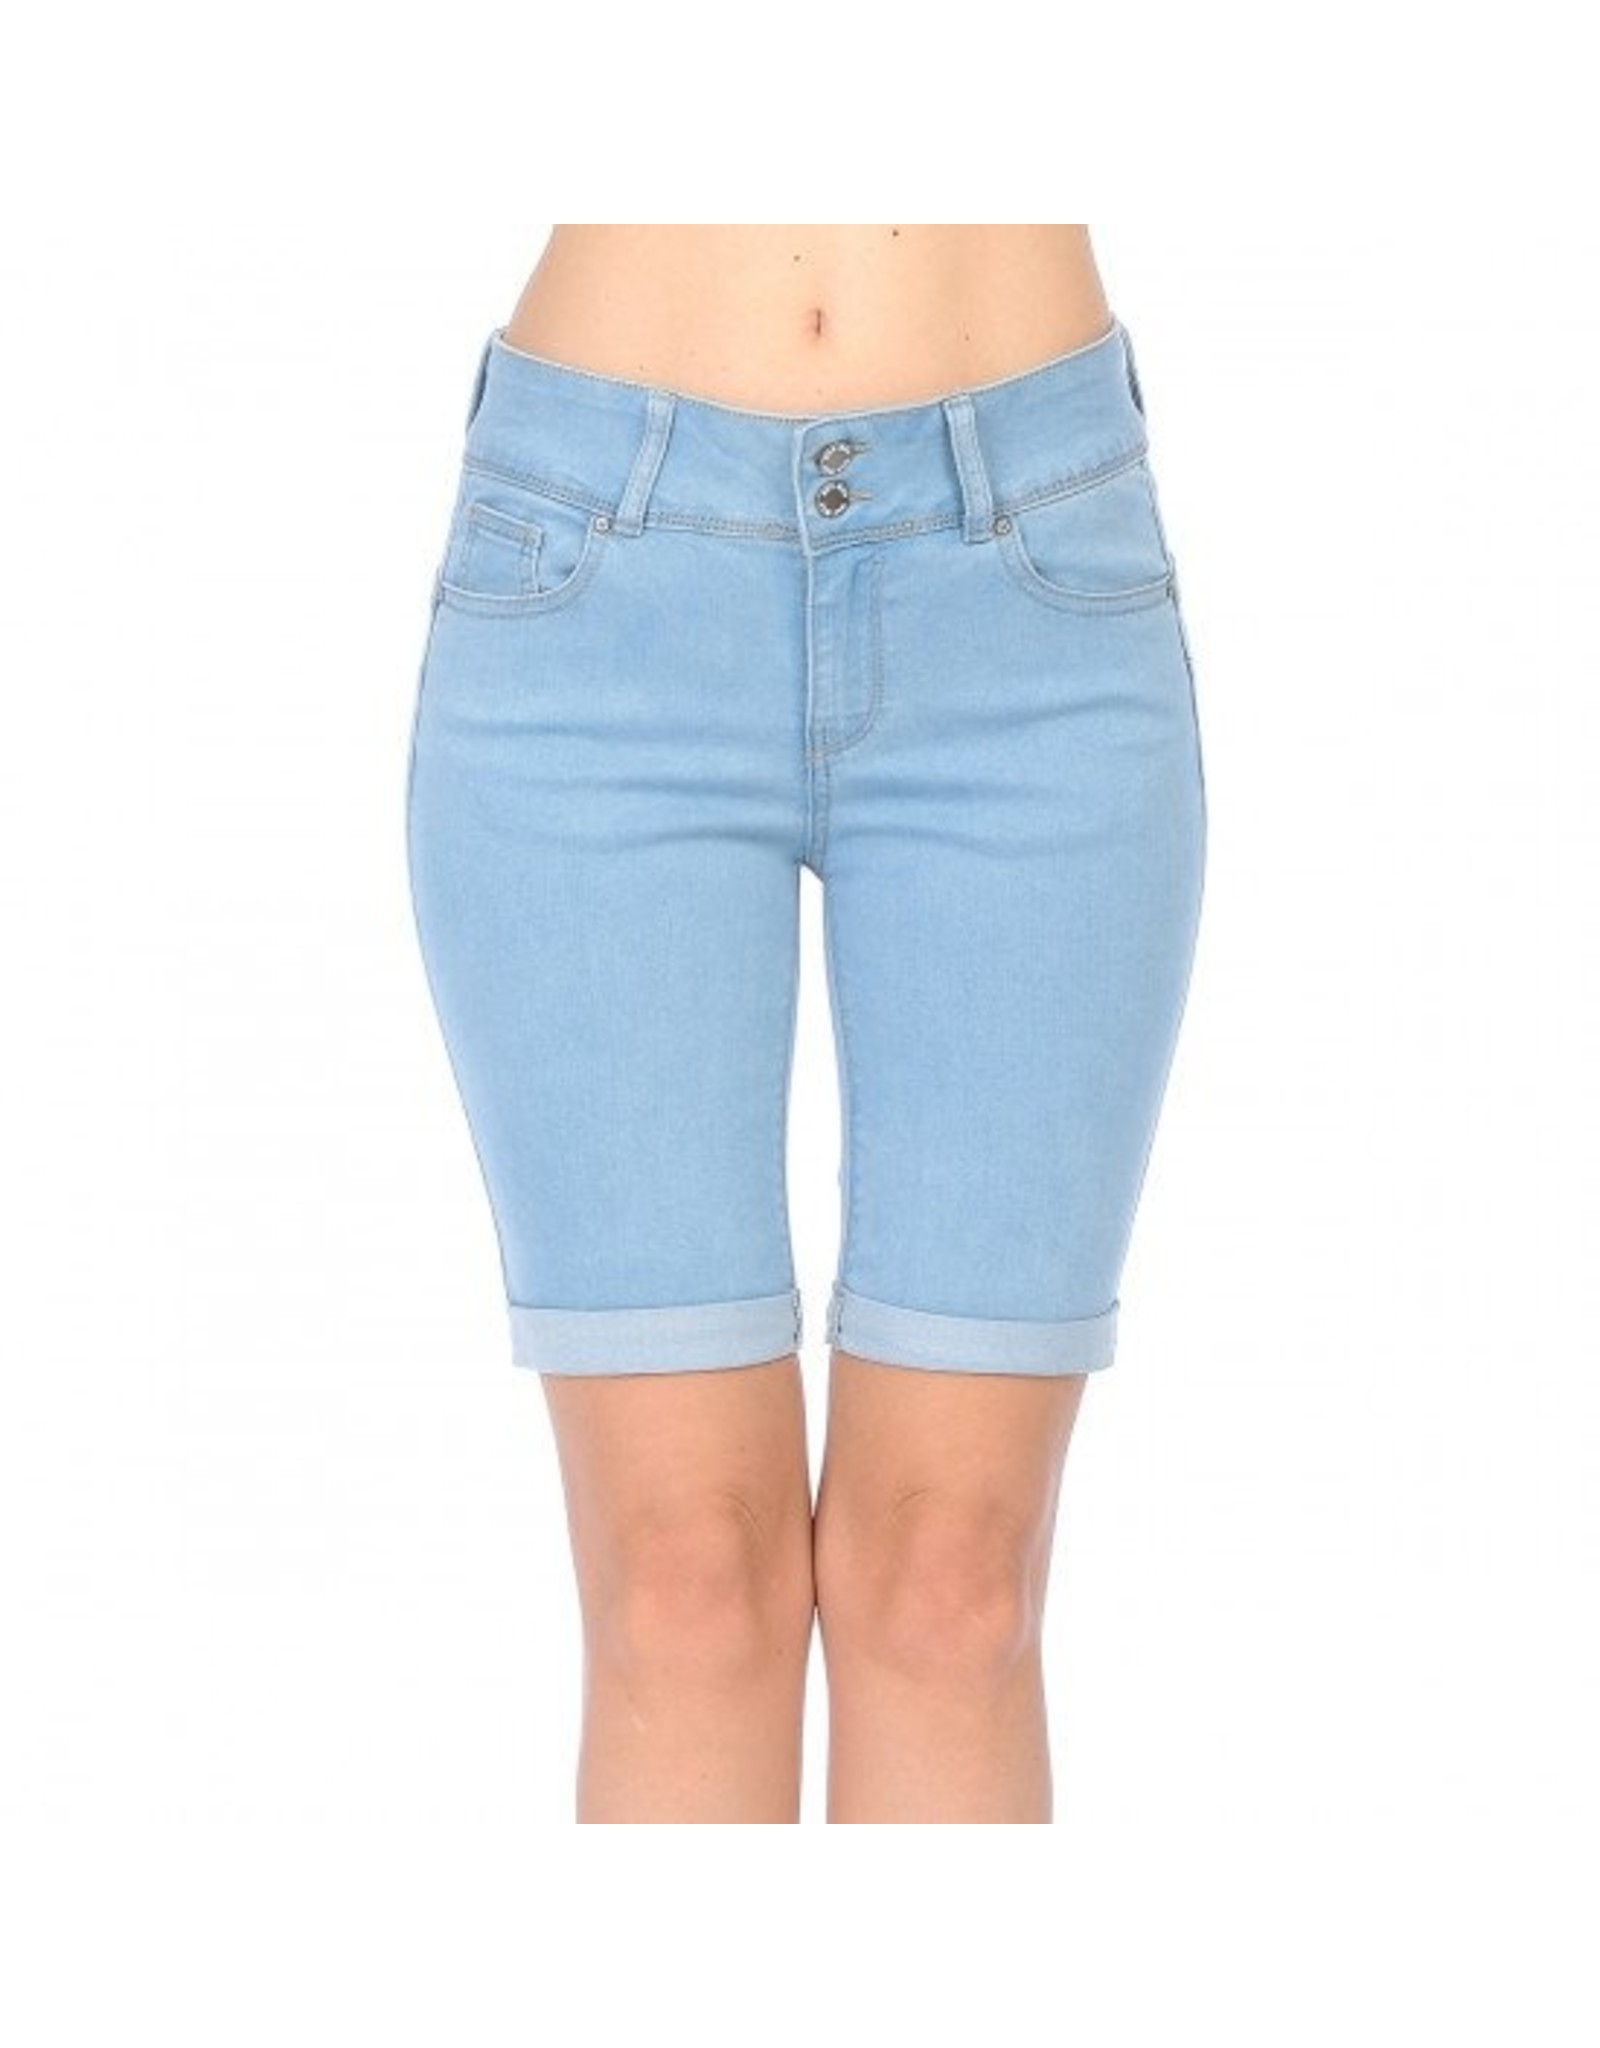 Wax Jeans - Bermuda Shorts - 90152